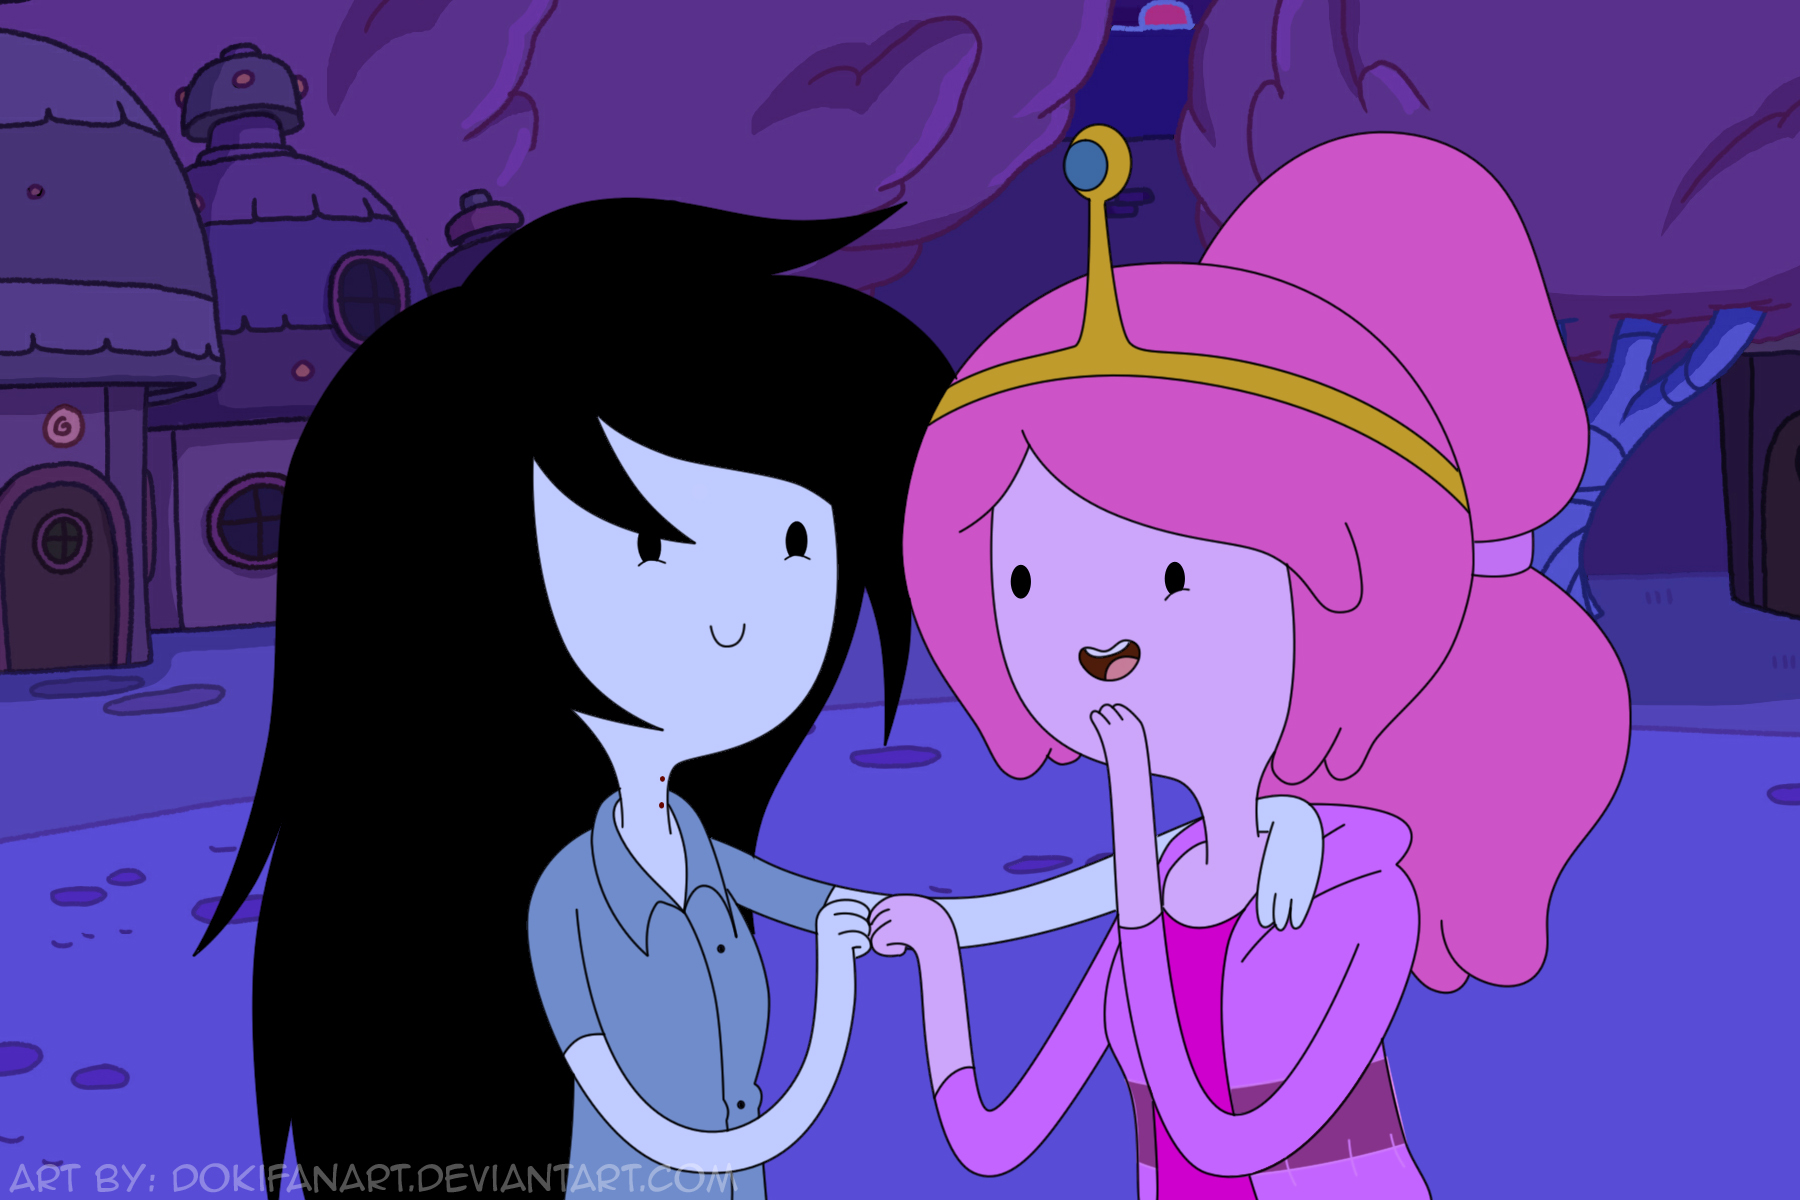 Romance between ‘adventure time’s’ princess bubblegum and marceline confirmed